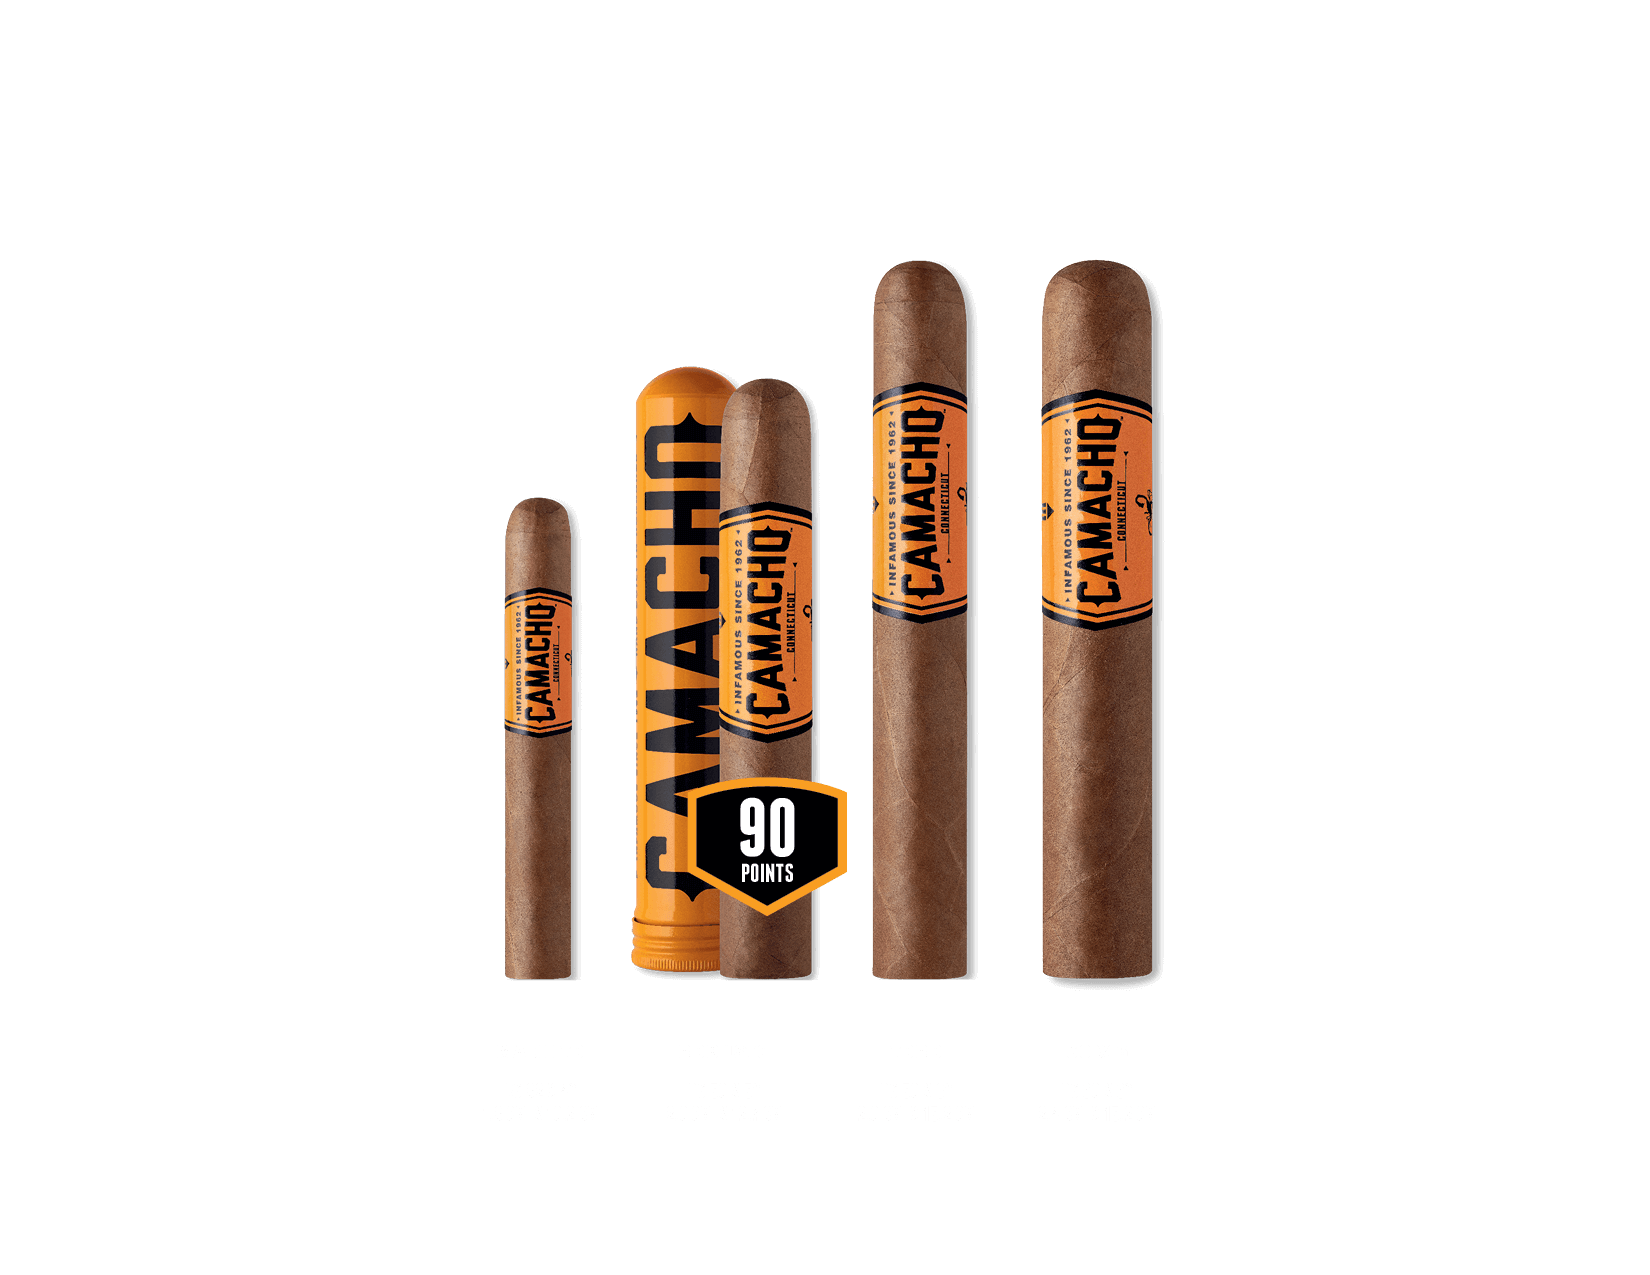 Camacho Connecticut Zigarren-Angebot - Machito - Robusto - Toro - Gordo 60x6